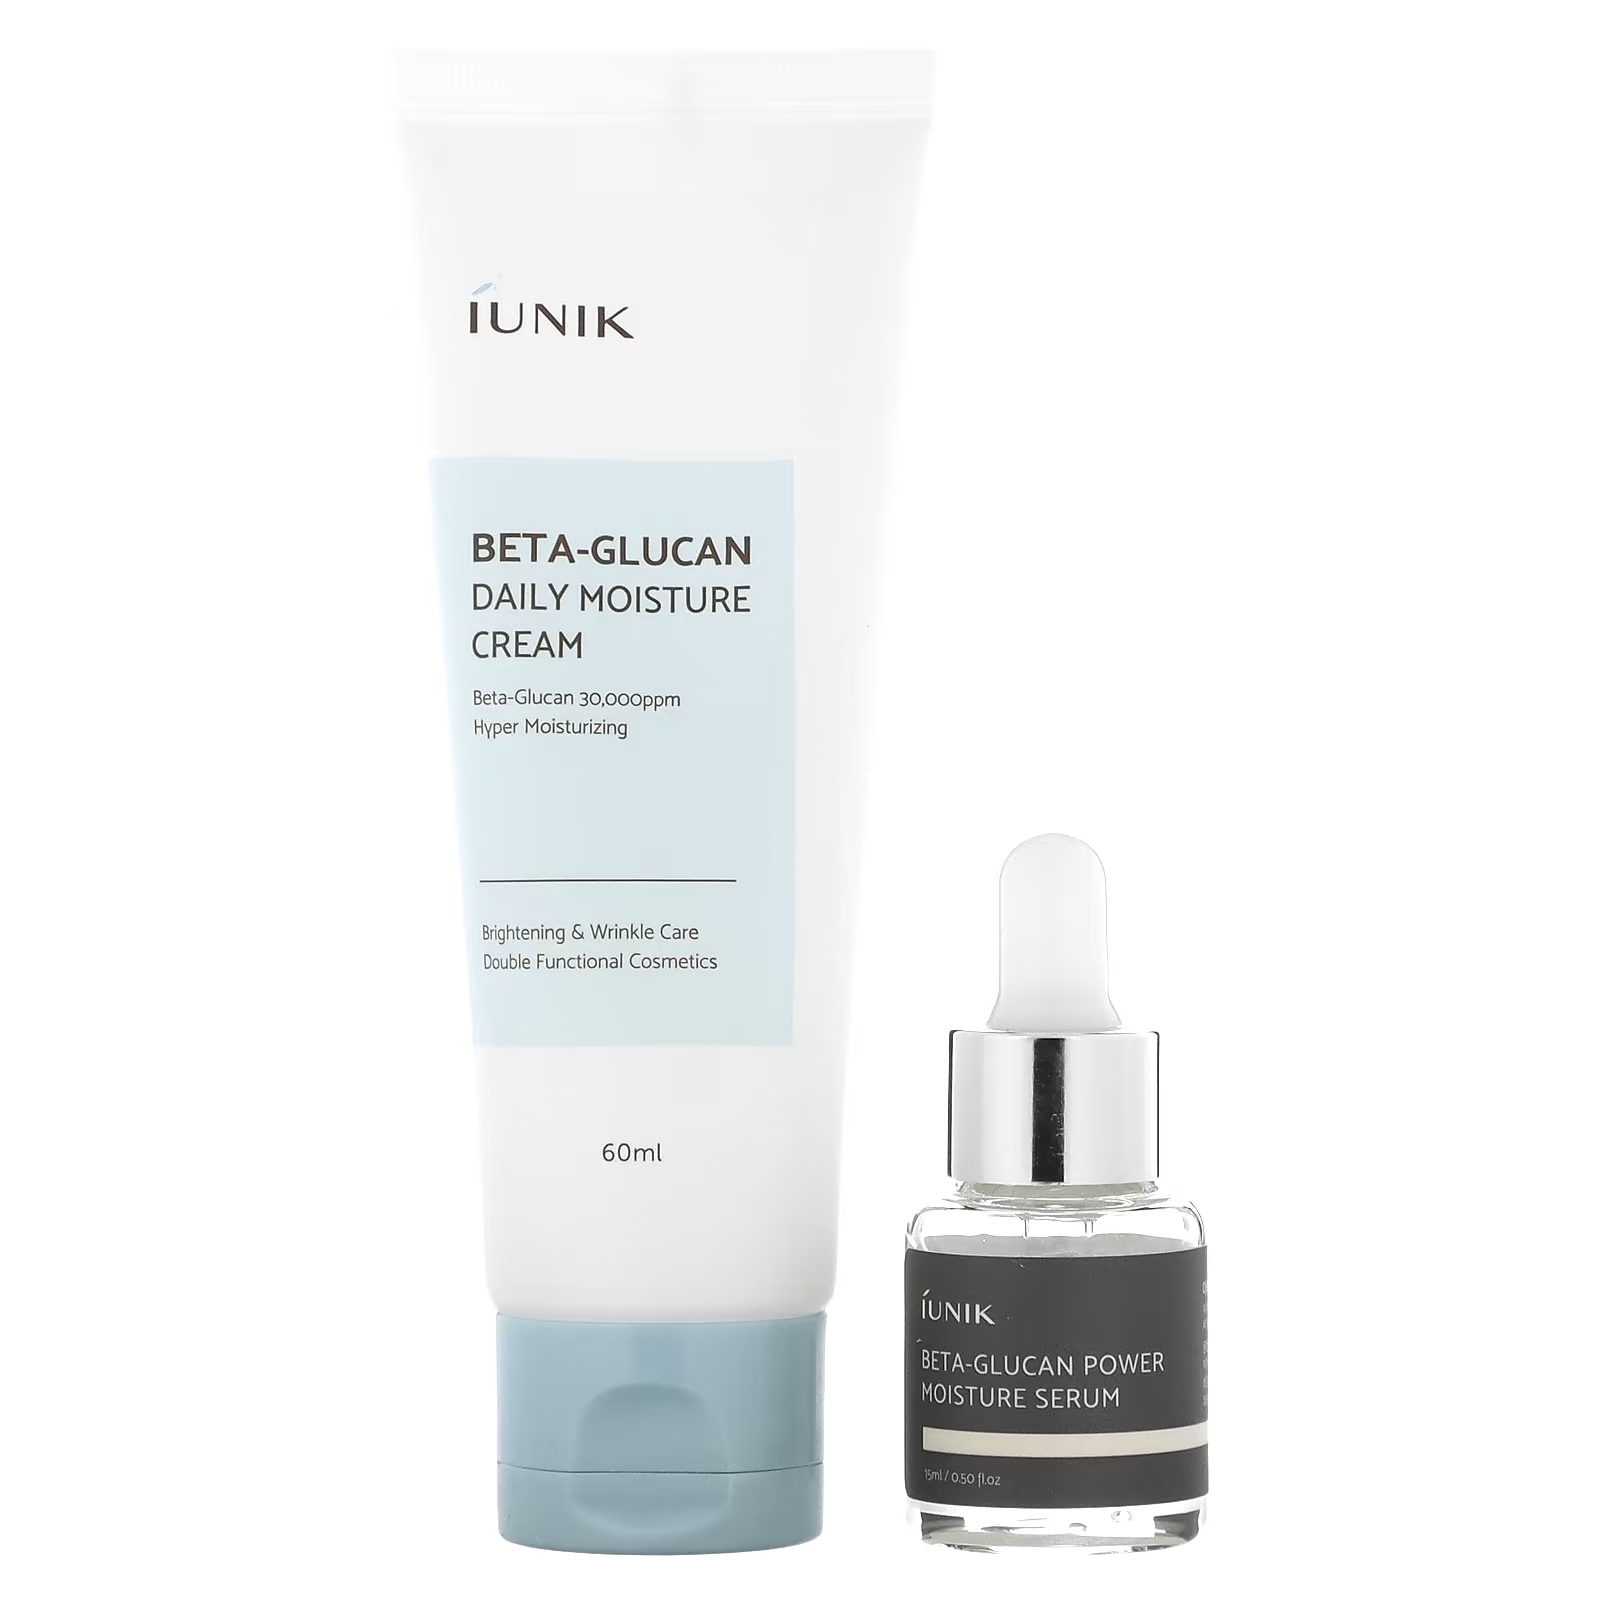 iUNIK Beta-Glucan Edition Набор для ухода за кожей, крем и мини-сыворотка, набор из 2 предметов цена и фото